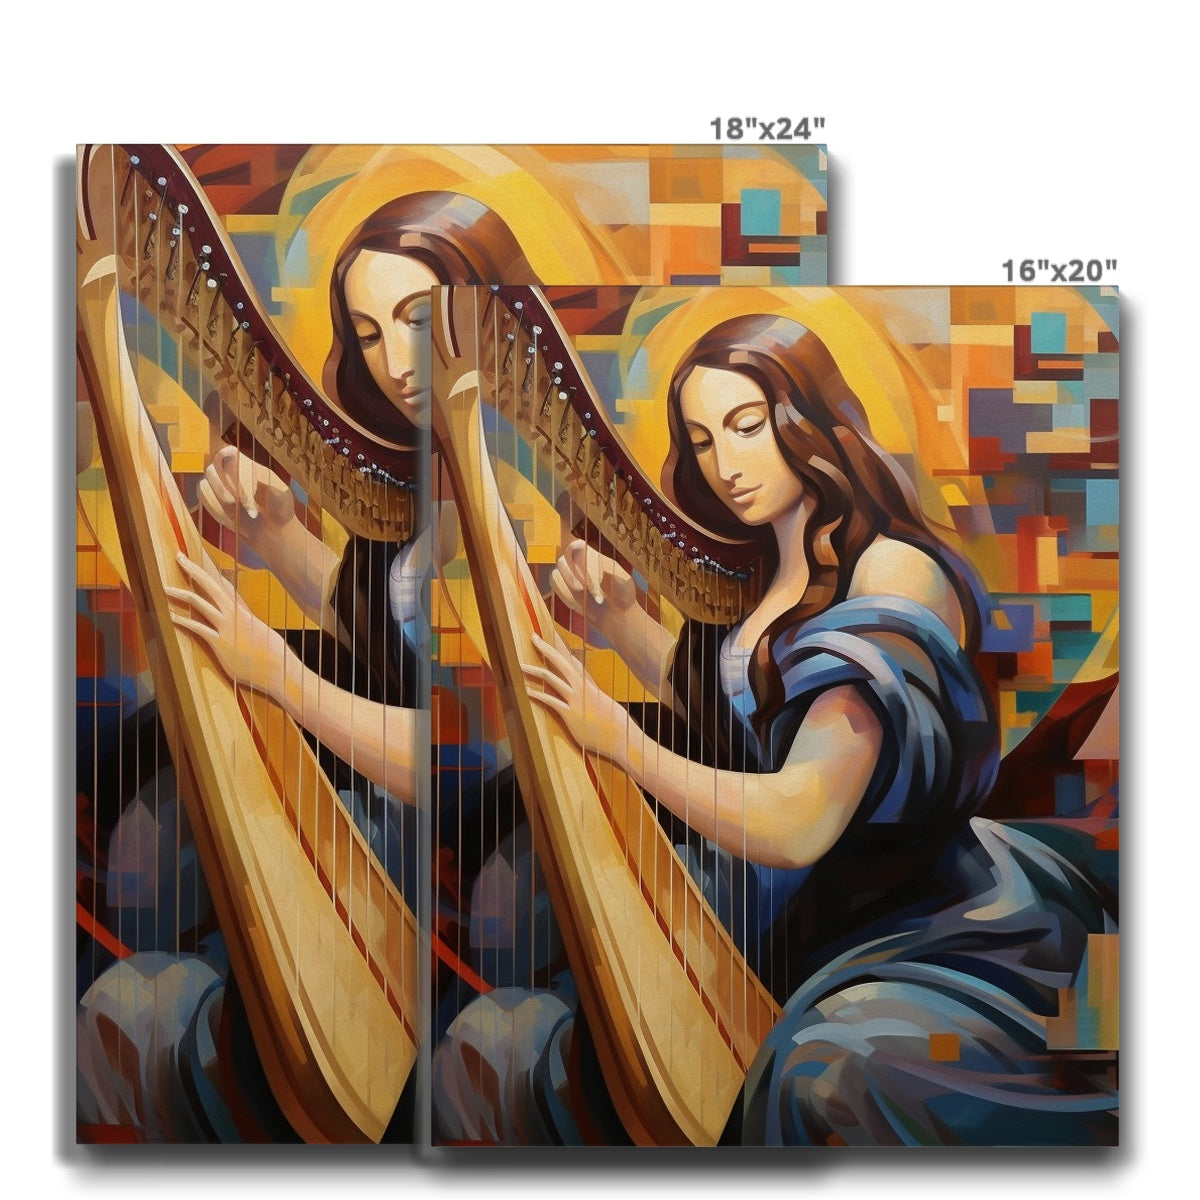 Harp Playing Mona Lisa: Limited Edition Canvas